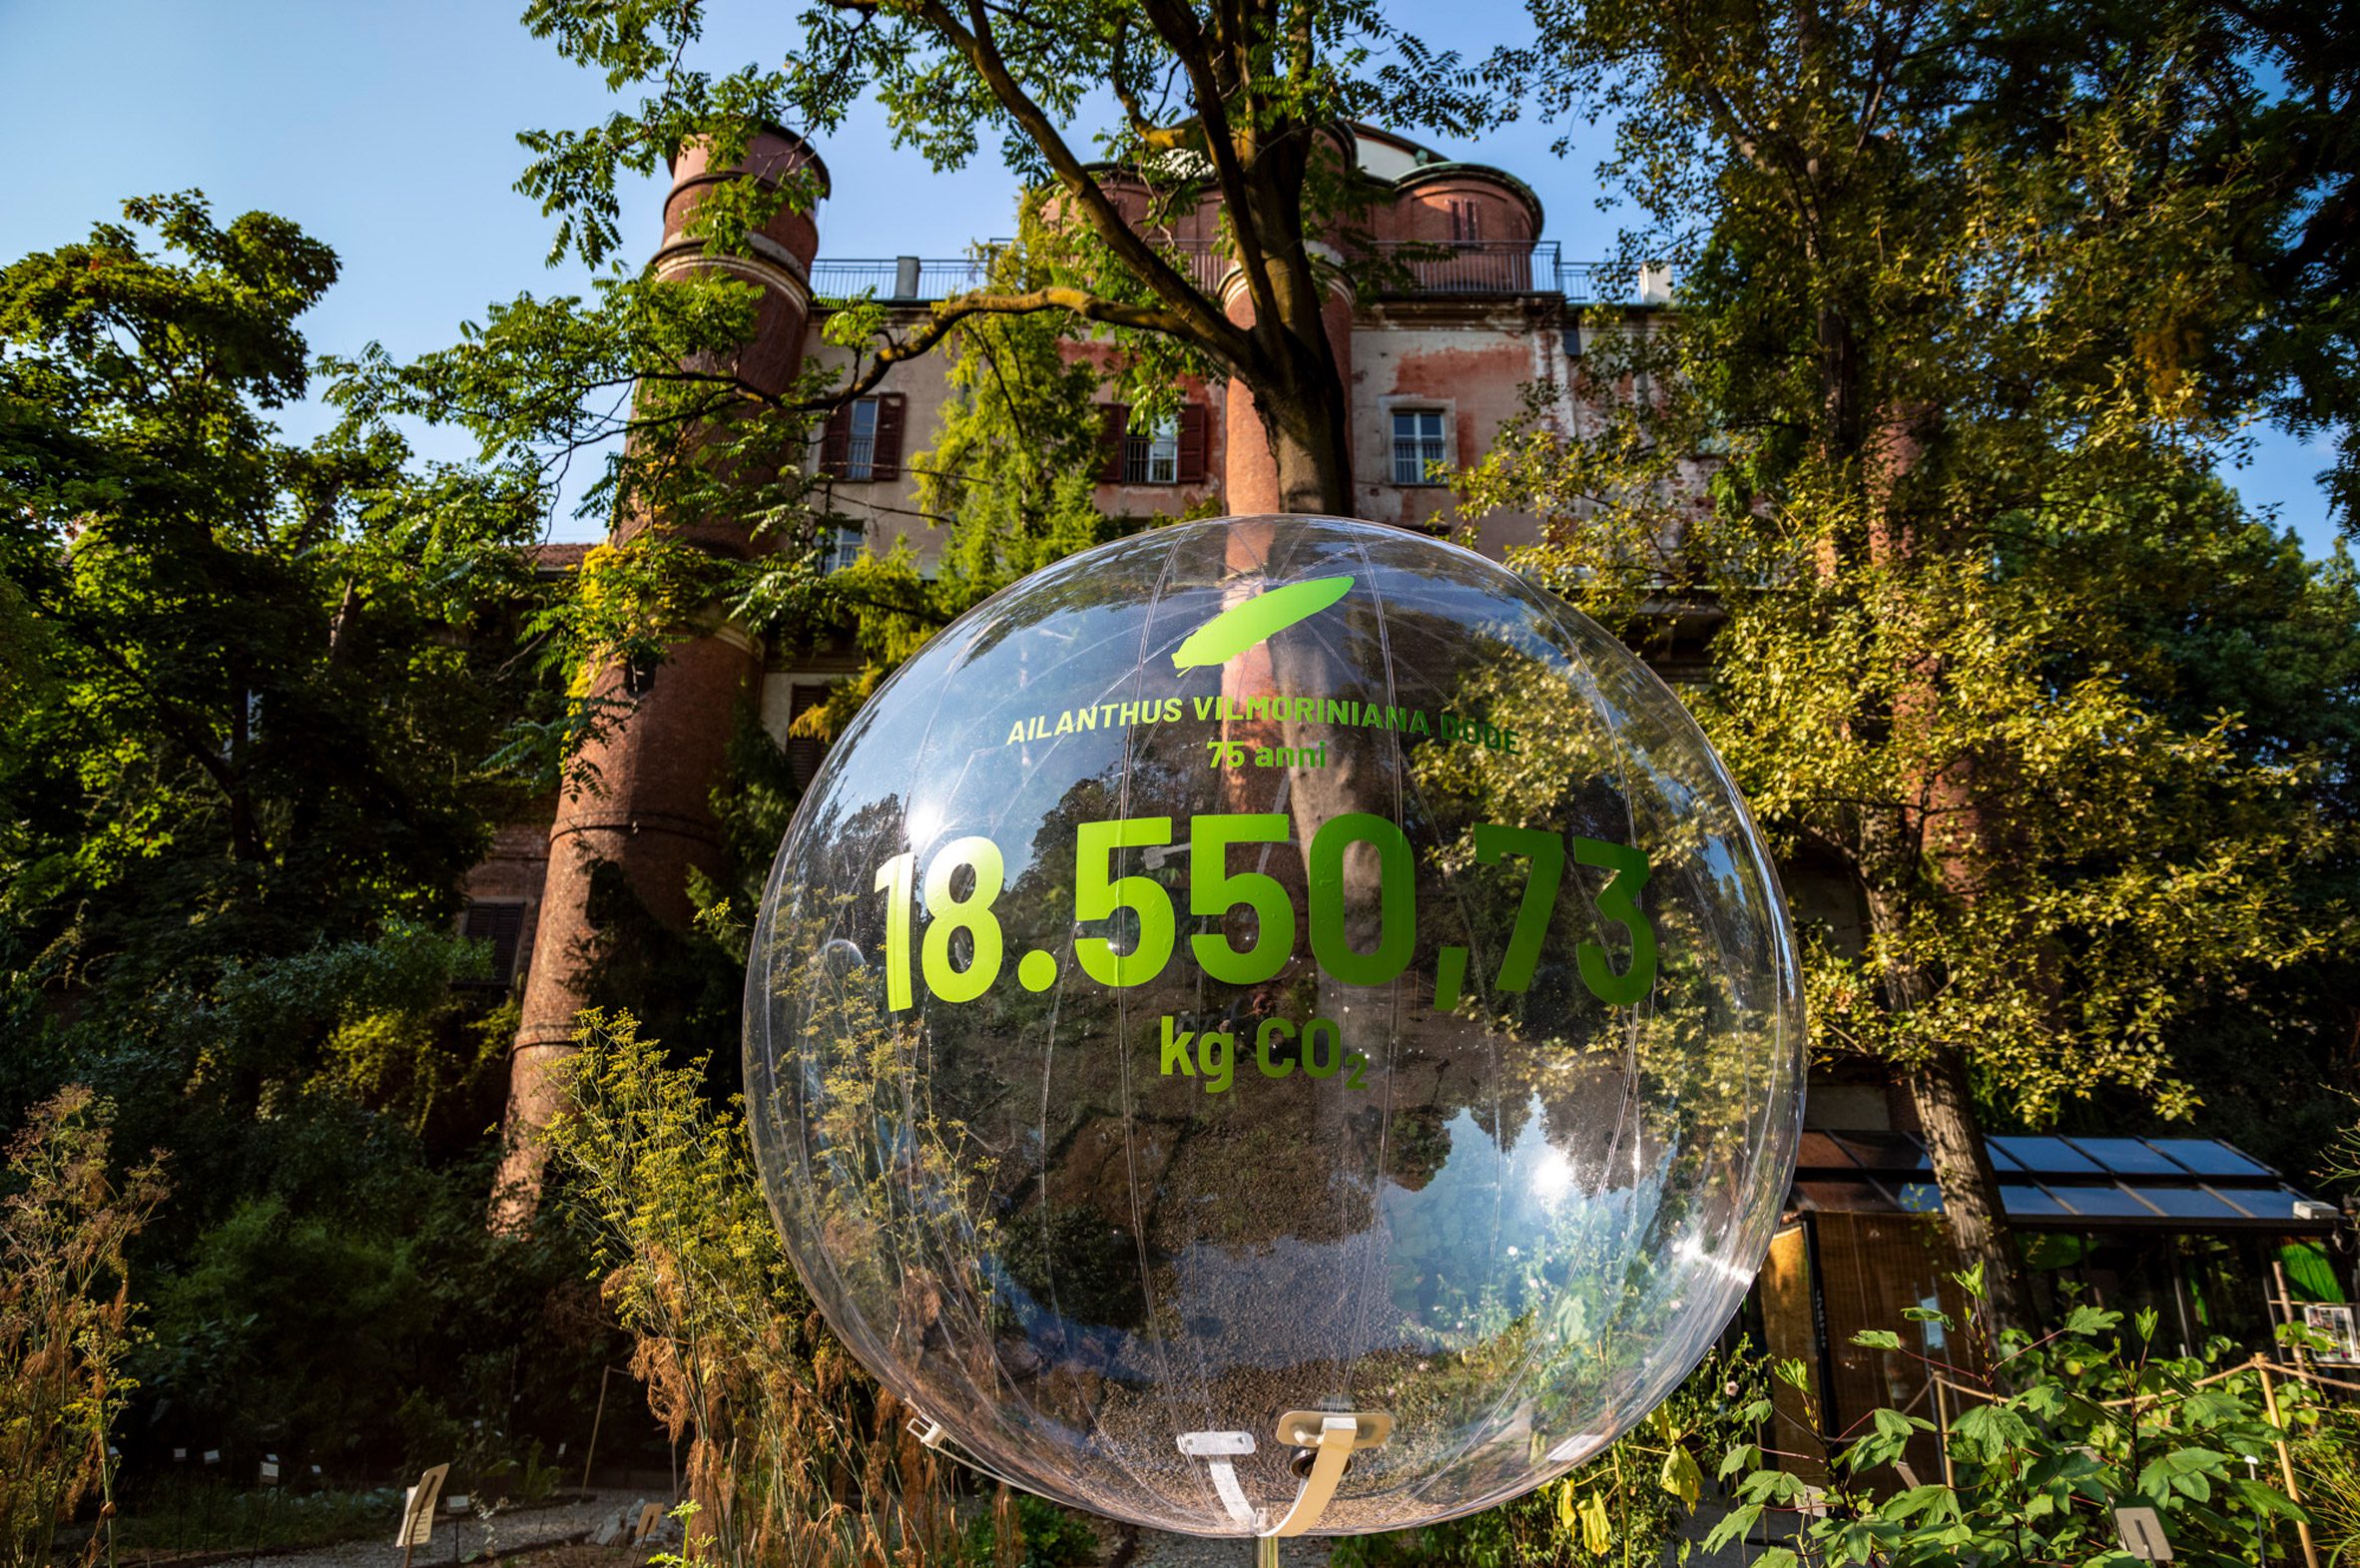 Transparent bubble bearing the figure 18,550.76 kilograms of CO2